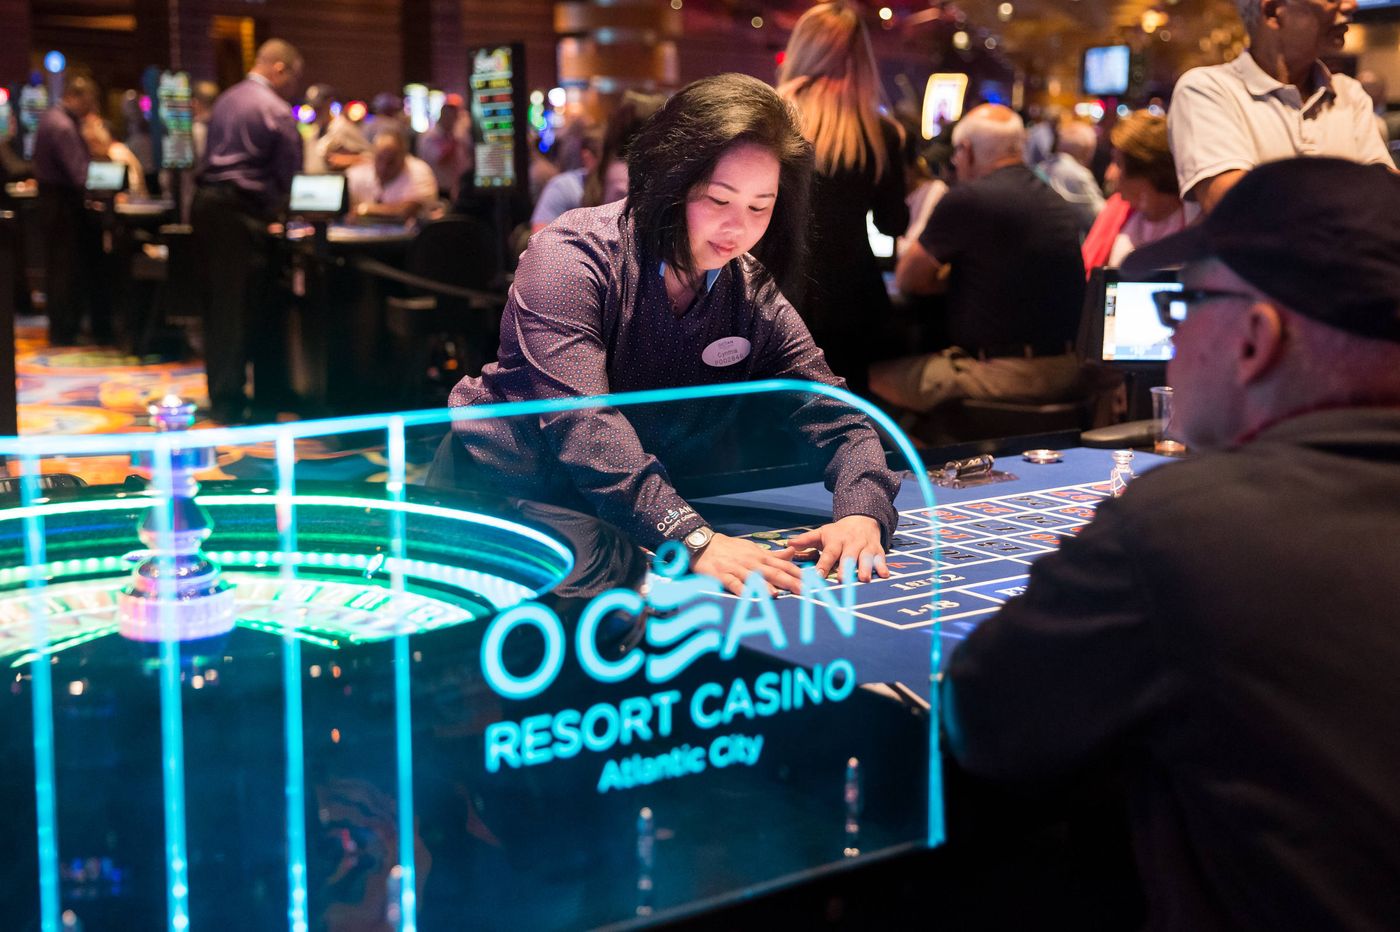 Atlantic City casinos gambling revenue